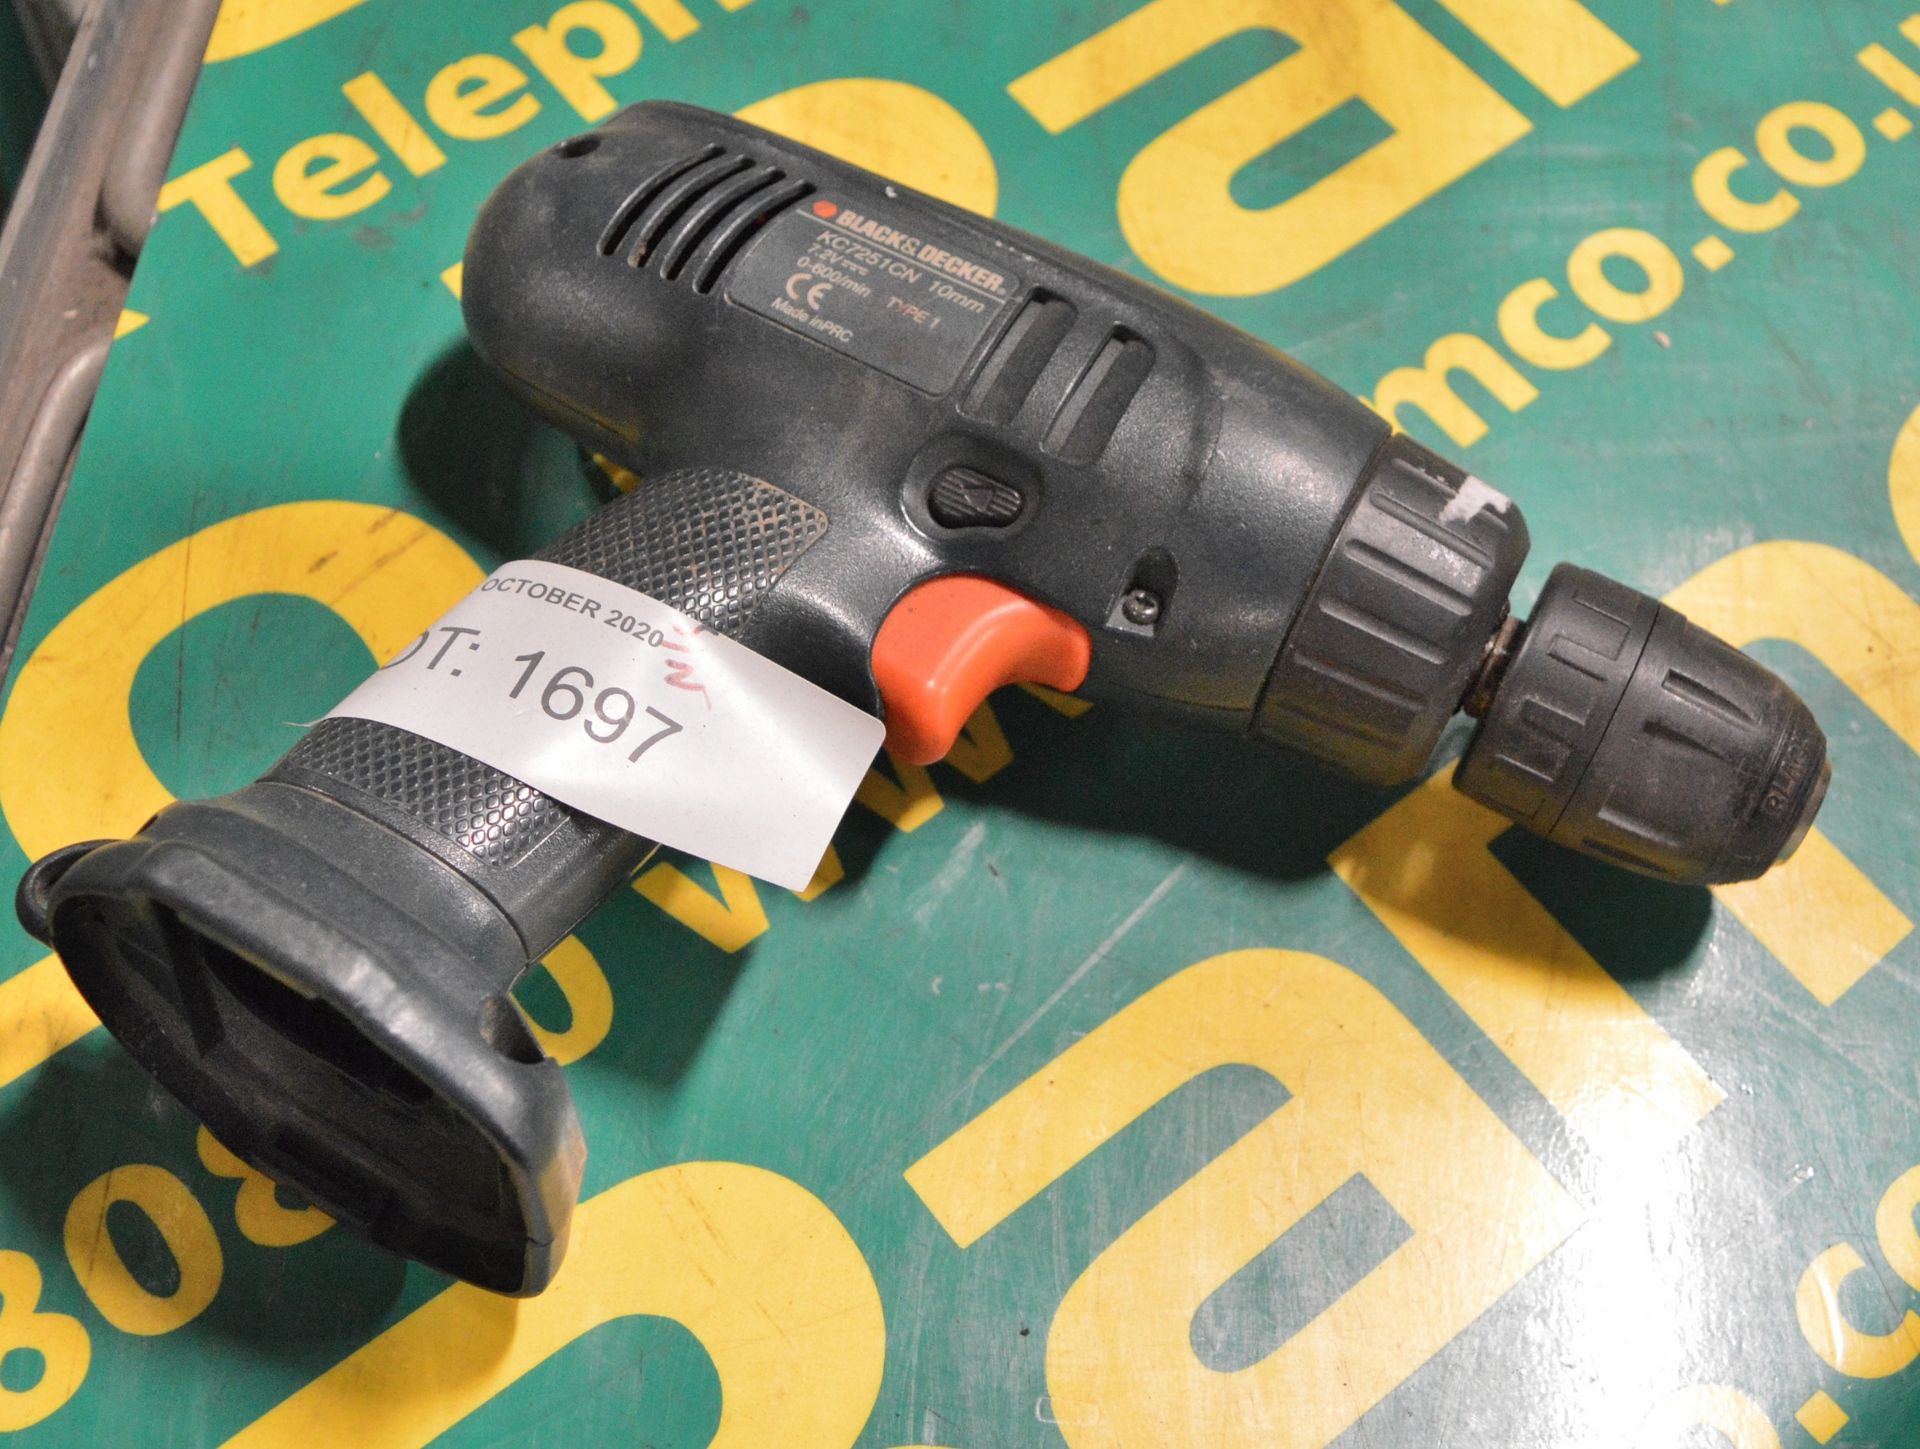 Black & Decker KC7251CN cordless drill - no battery - no charger